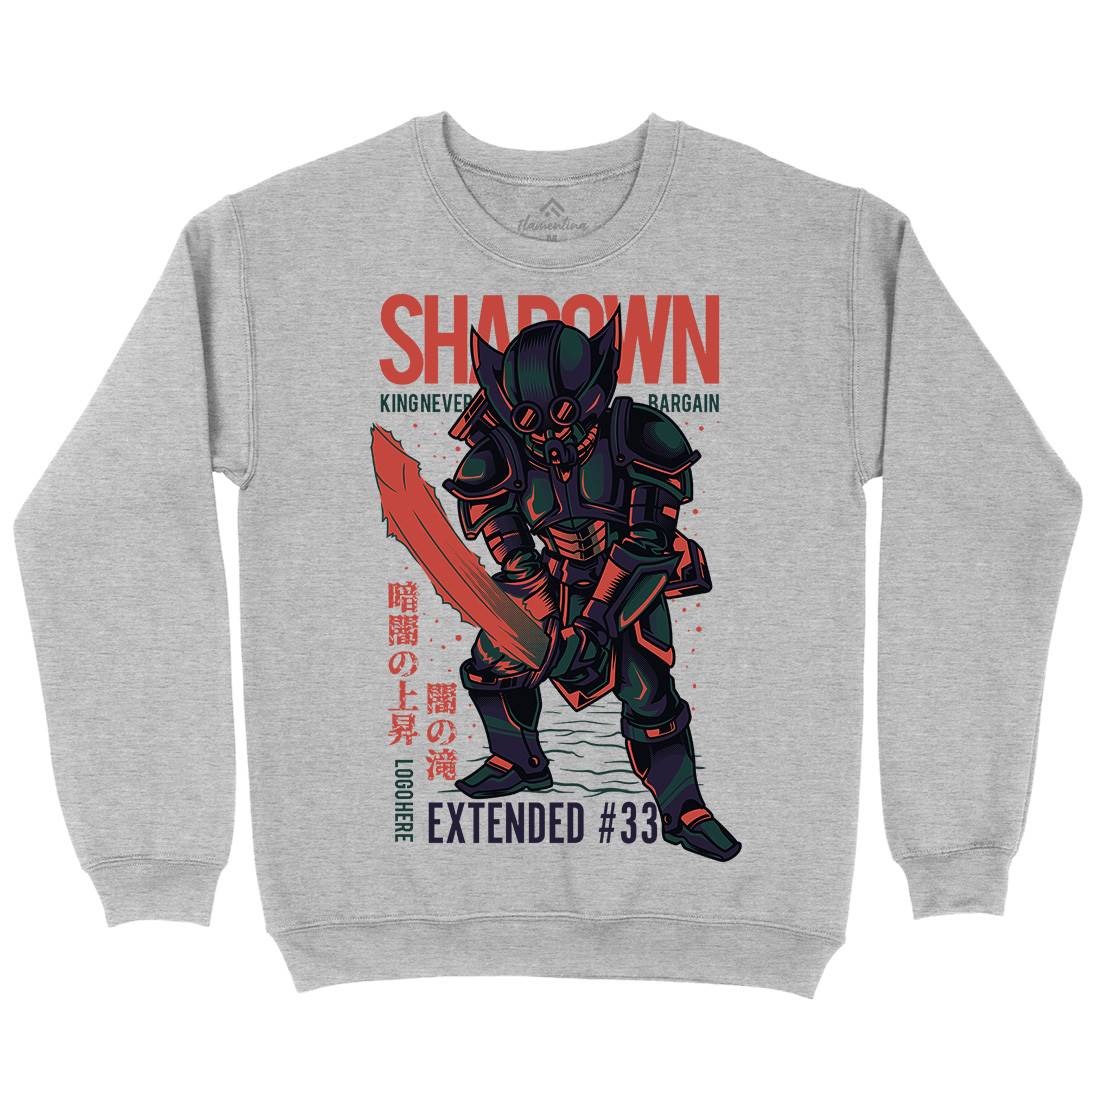 Shadown Knight Kids Crew Neck Sweatshirt Warriors D812